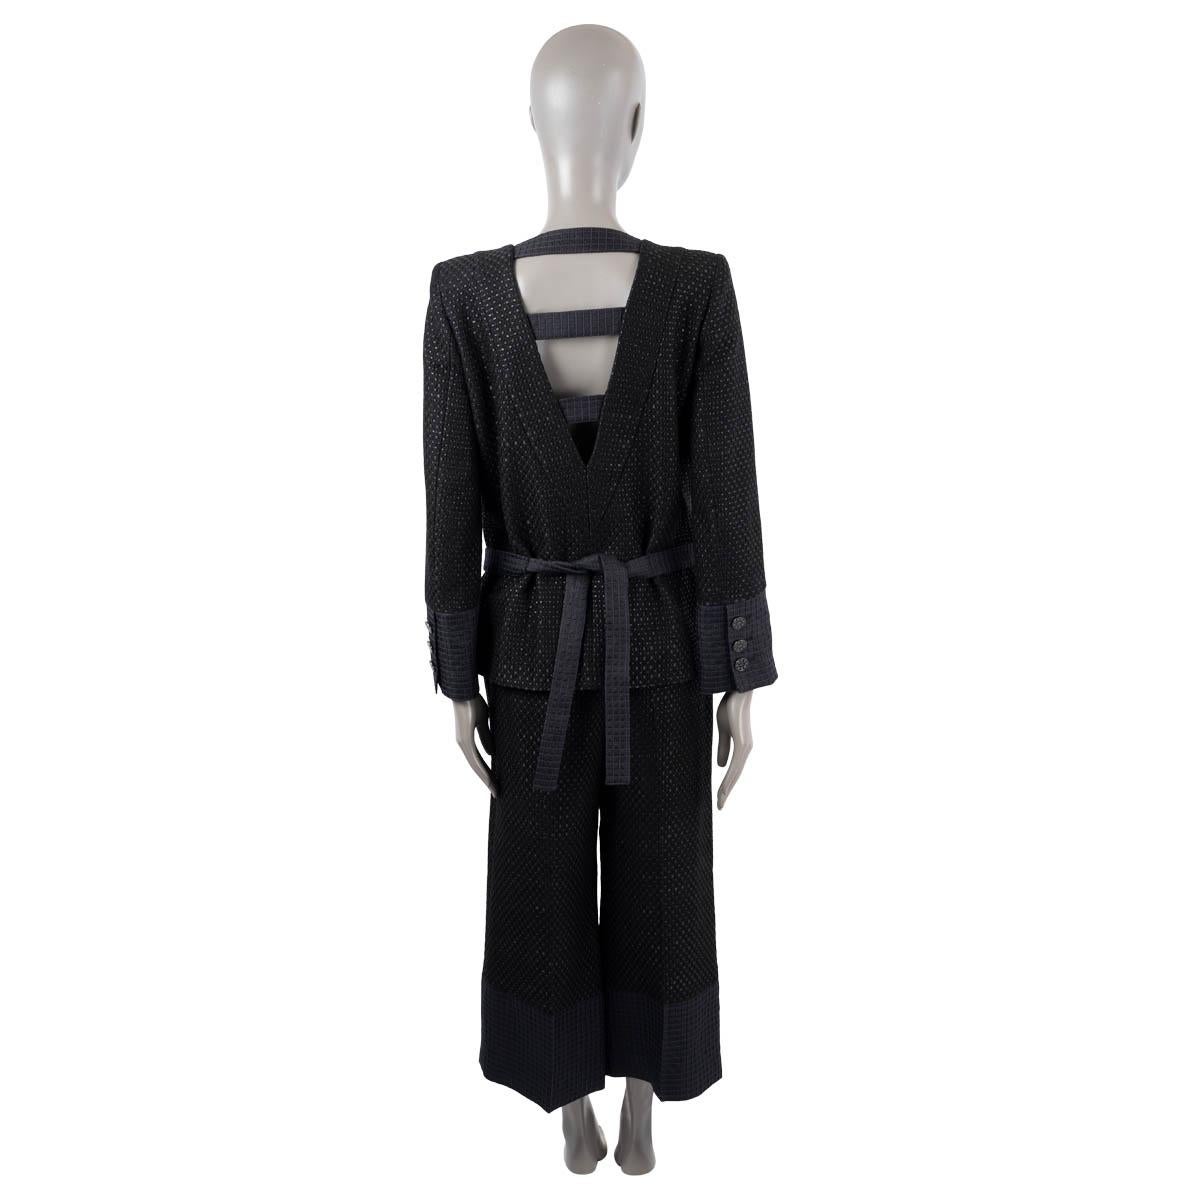 Women's CHANEL black cotton 2016 16C SEOUL DOUBLE BREASTED PANT Suit 38 S